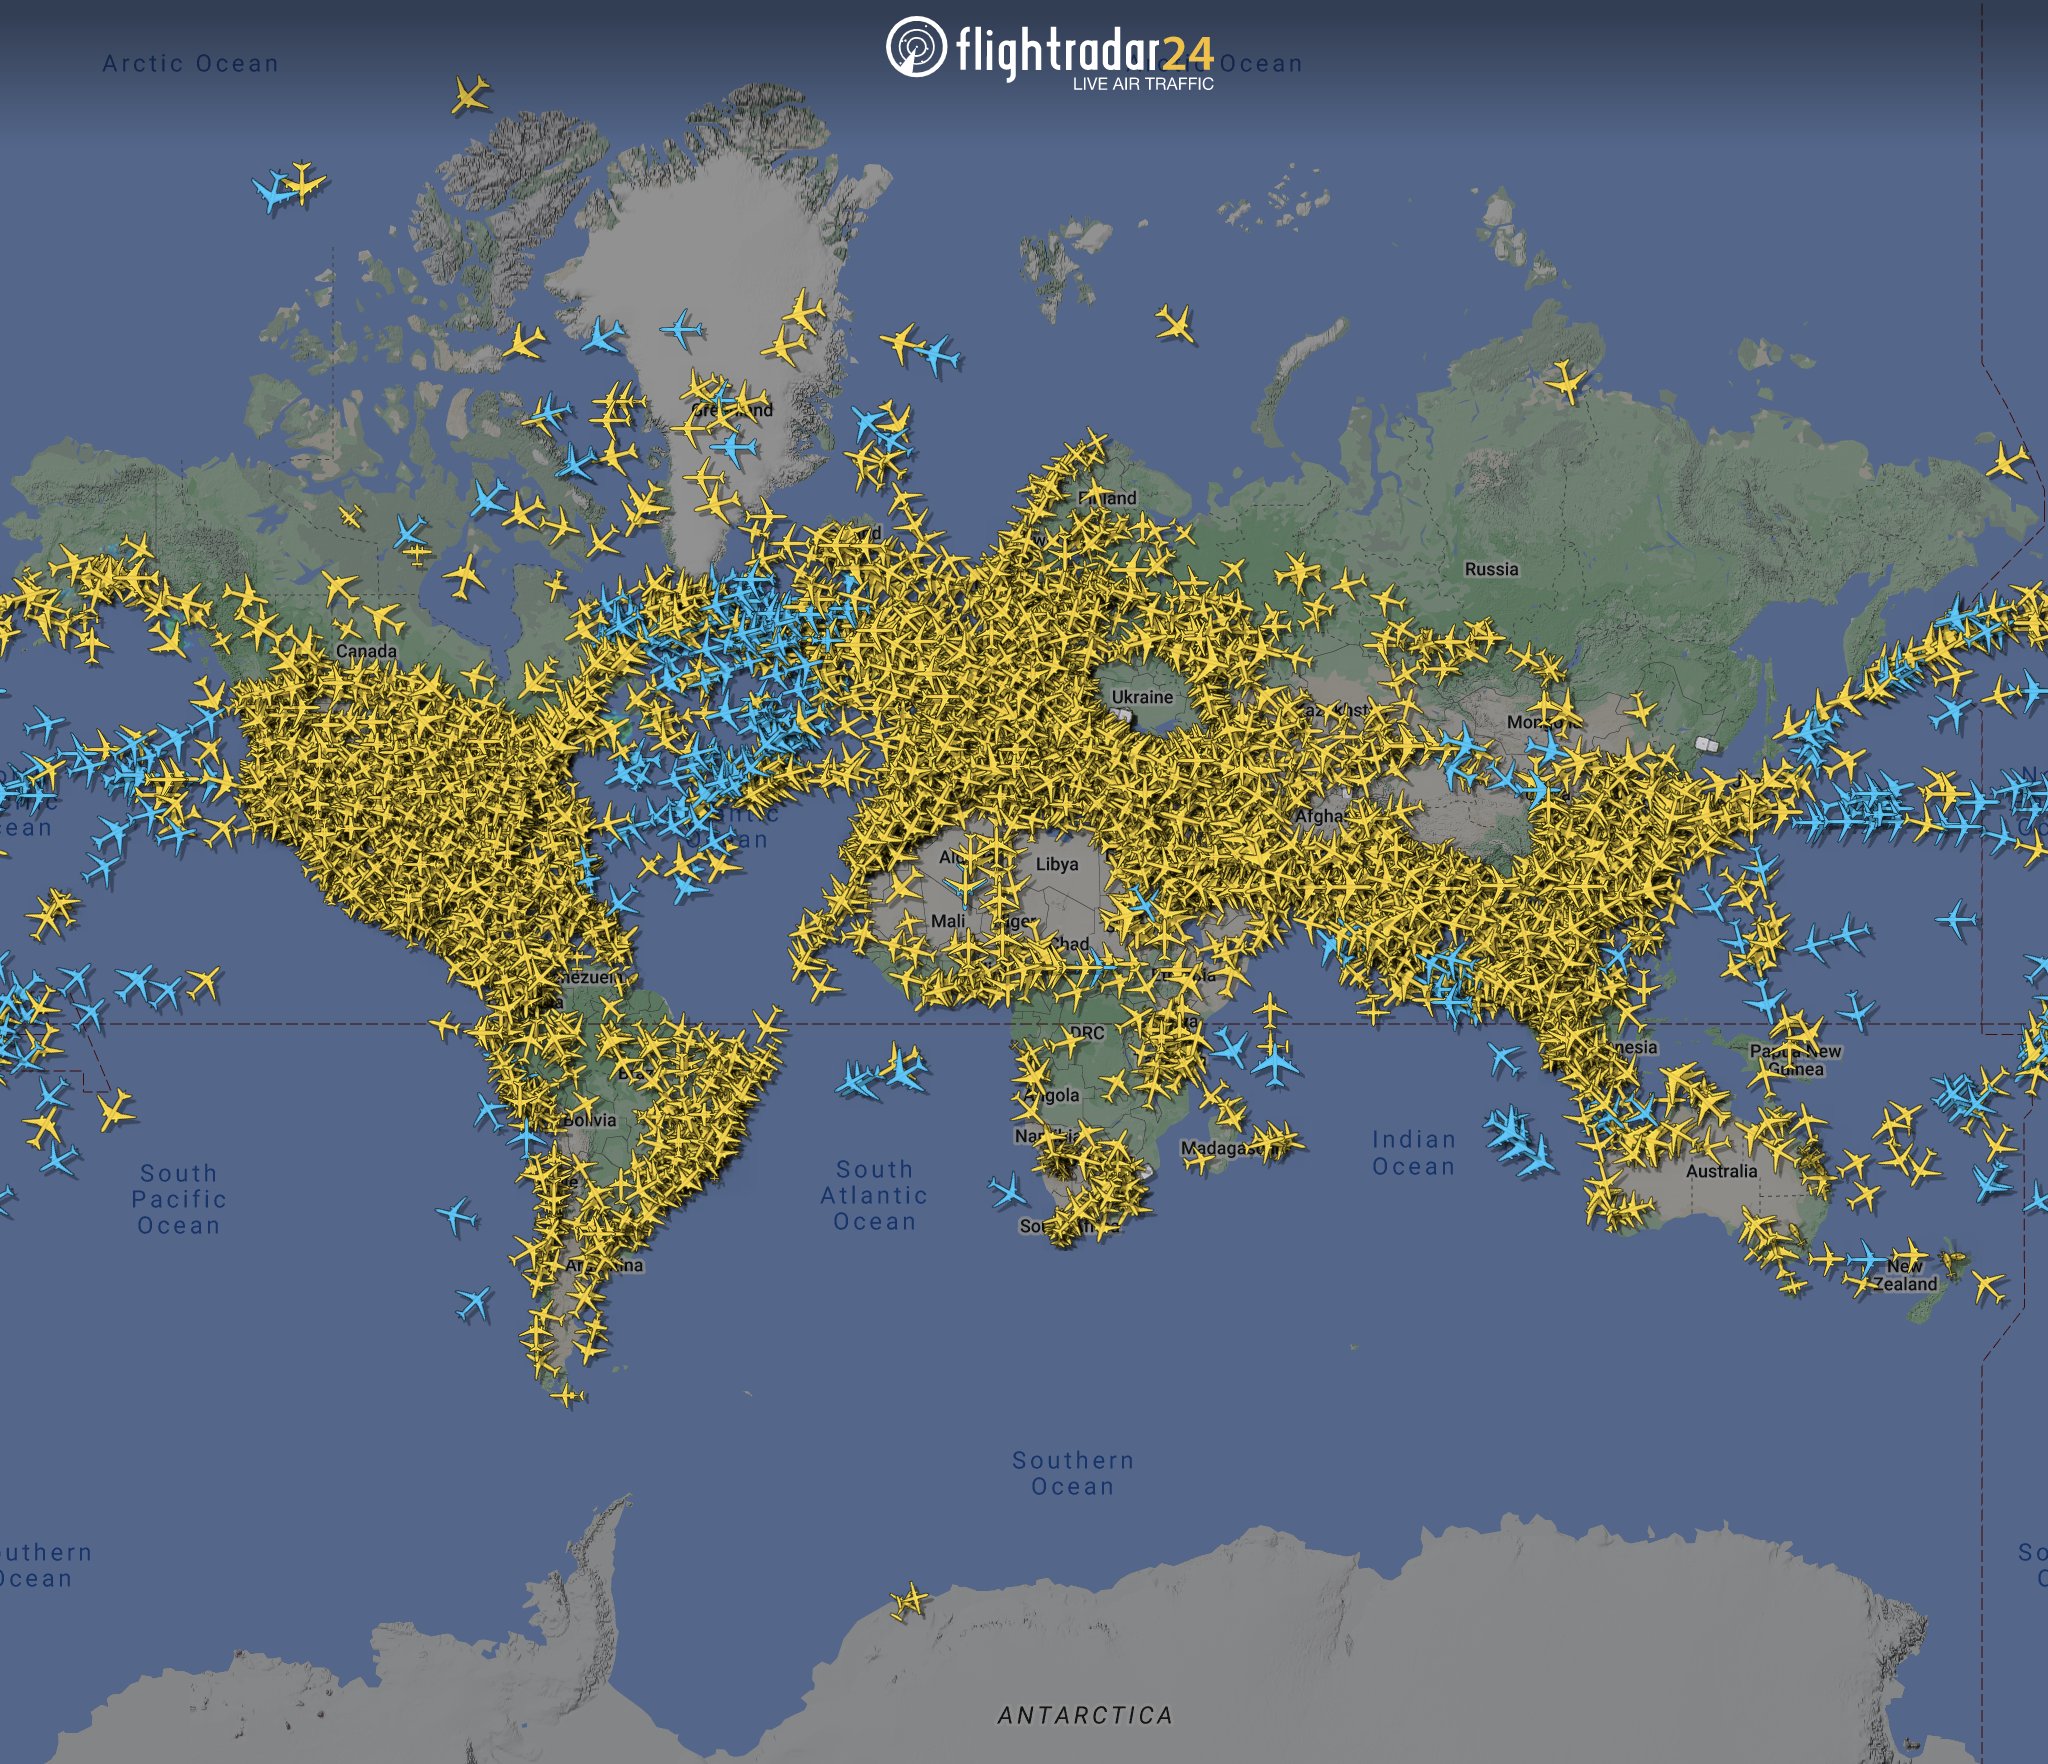 Flightradar24 on Twitter: "Global air traffic on the first day of 2023.  https://t.co/OCno2bPK0s" / Twitter